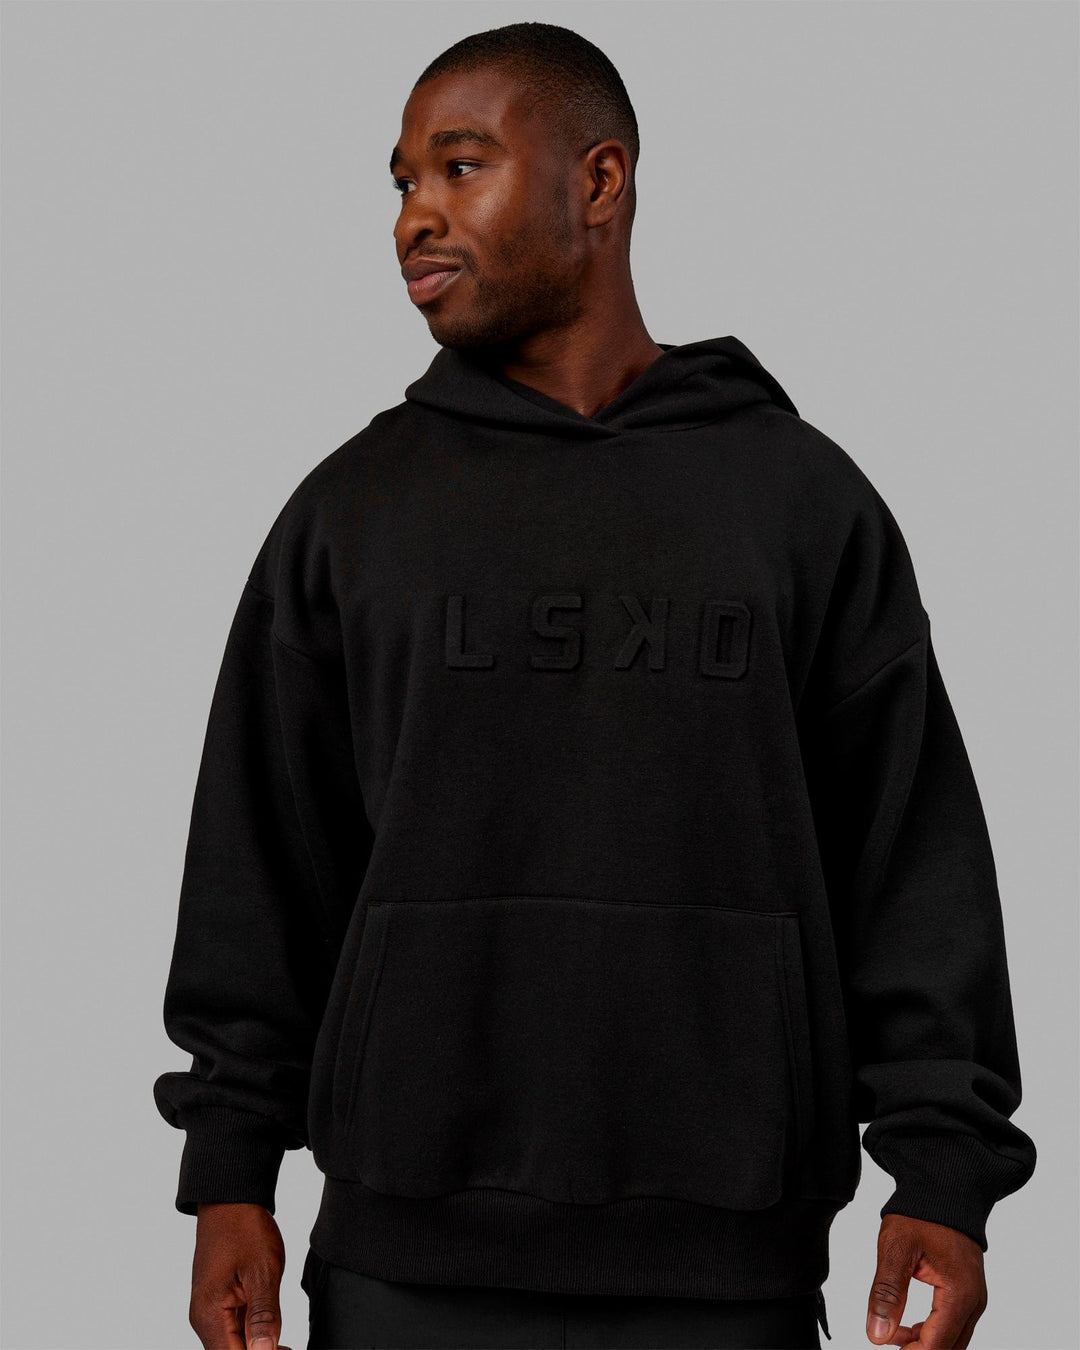 Man wearing Unisex Stamped Hoodie Oversize - Black